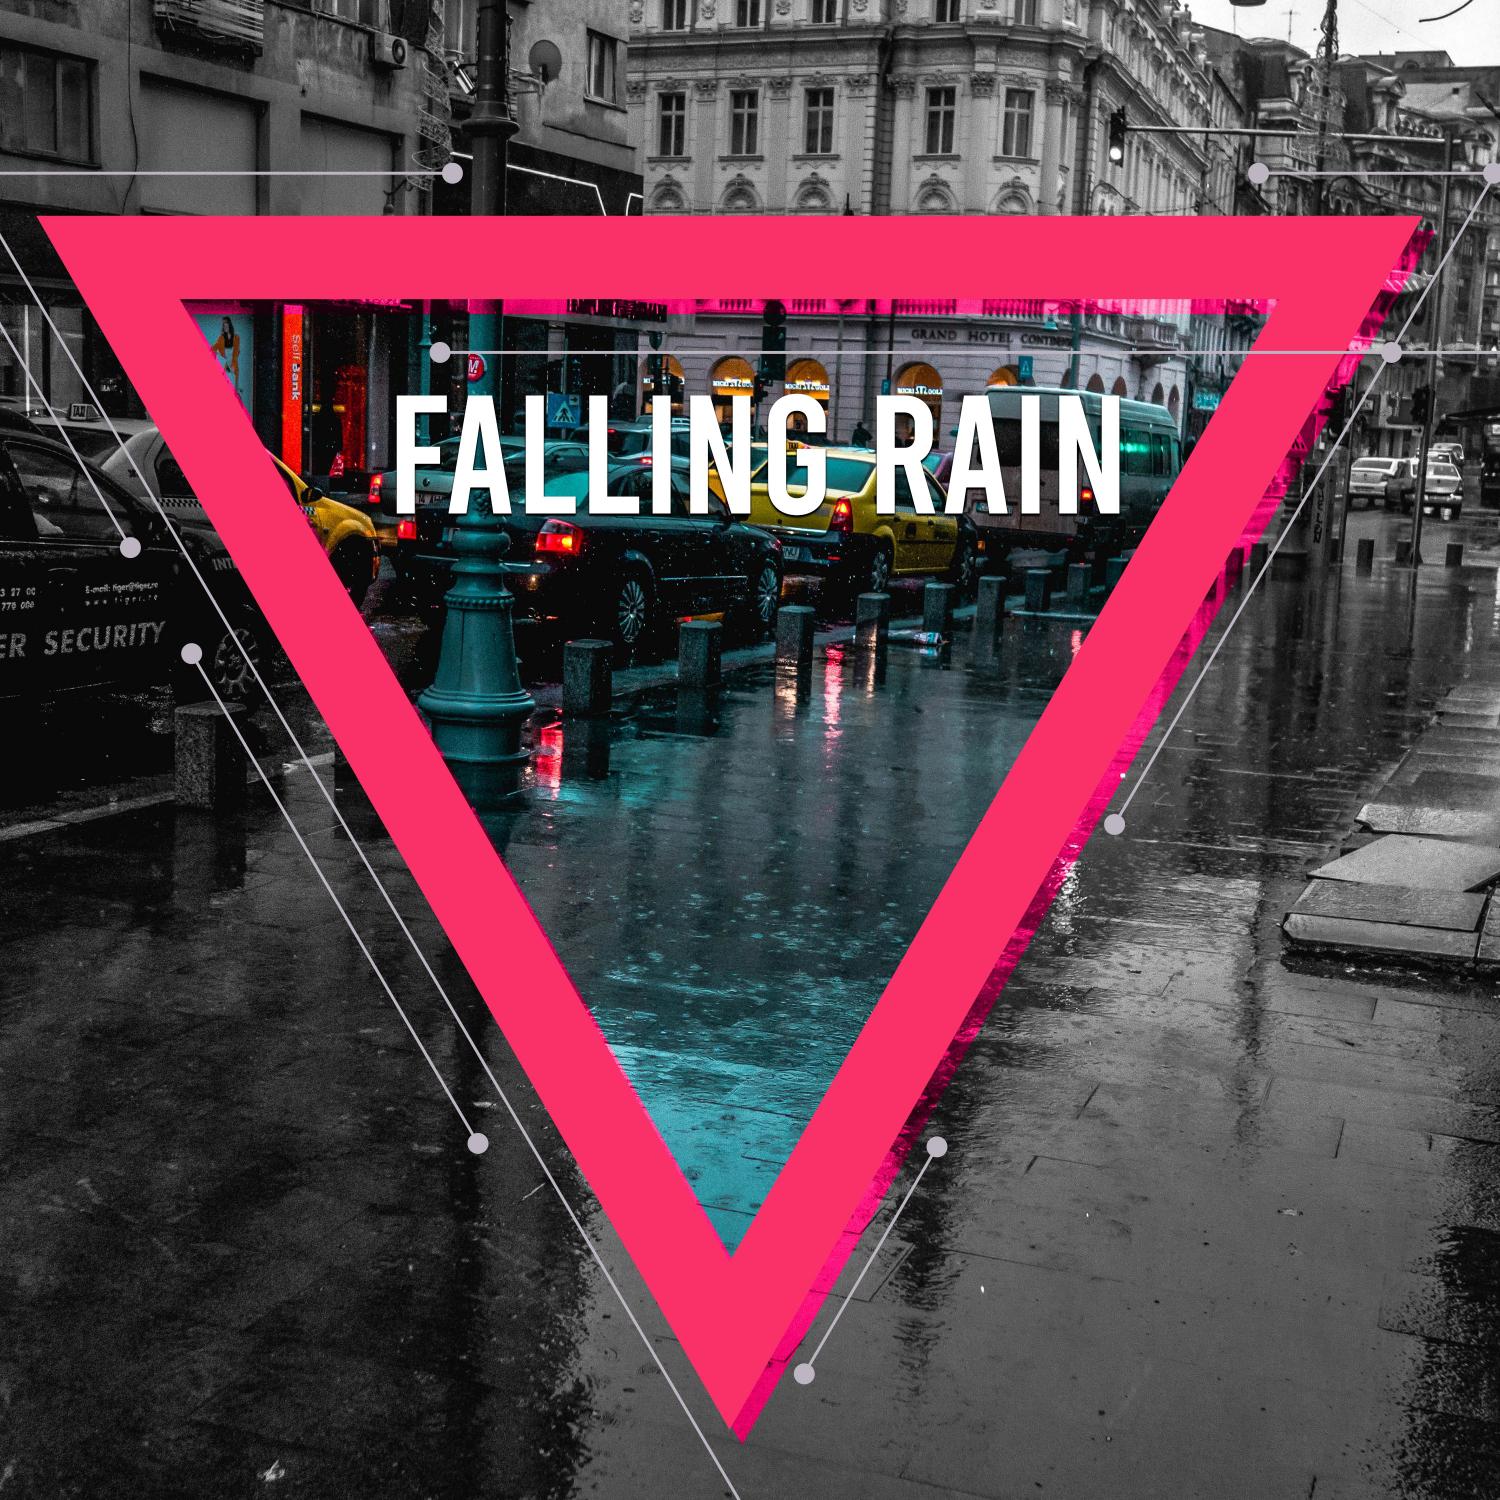 14 Rain and Nature Sounds of Calming and Meditative Falling Rain